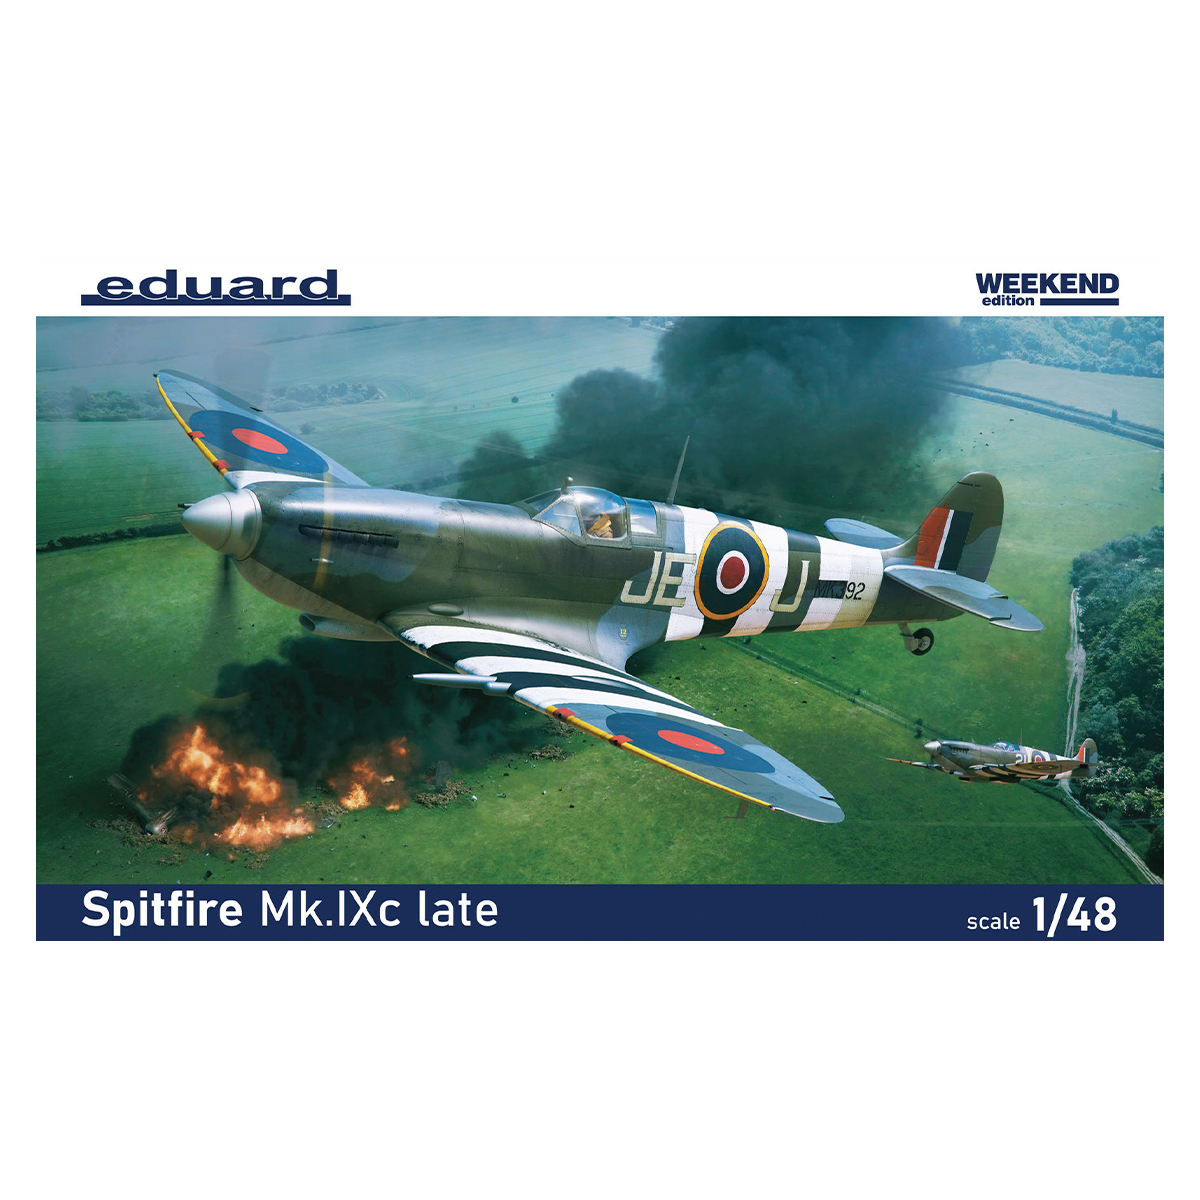 Spitfire Mk.IXc late 1/48